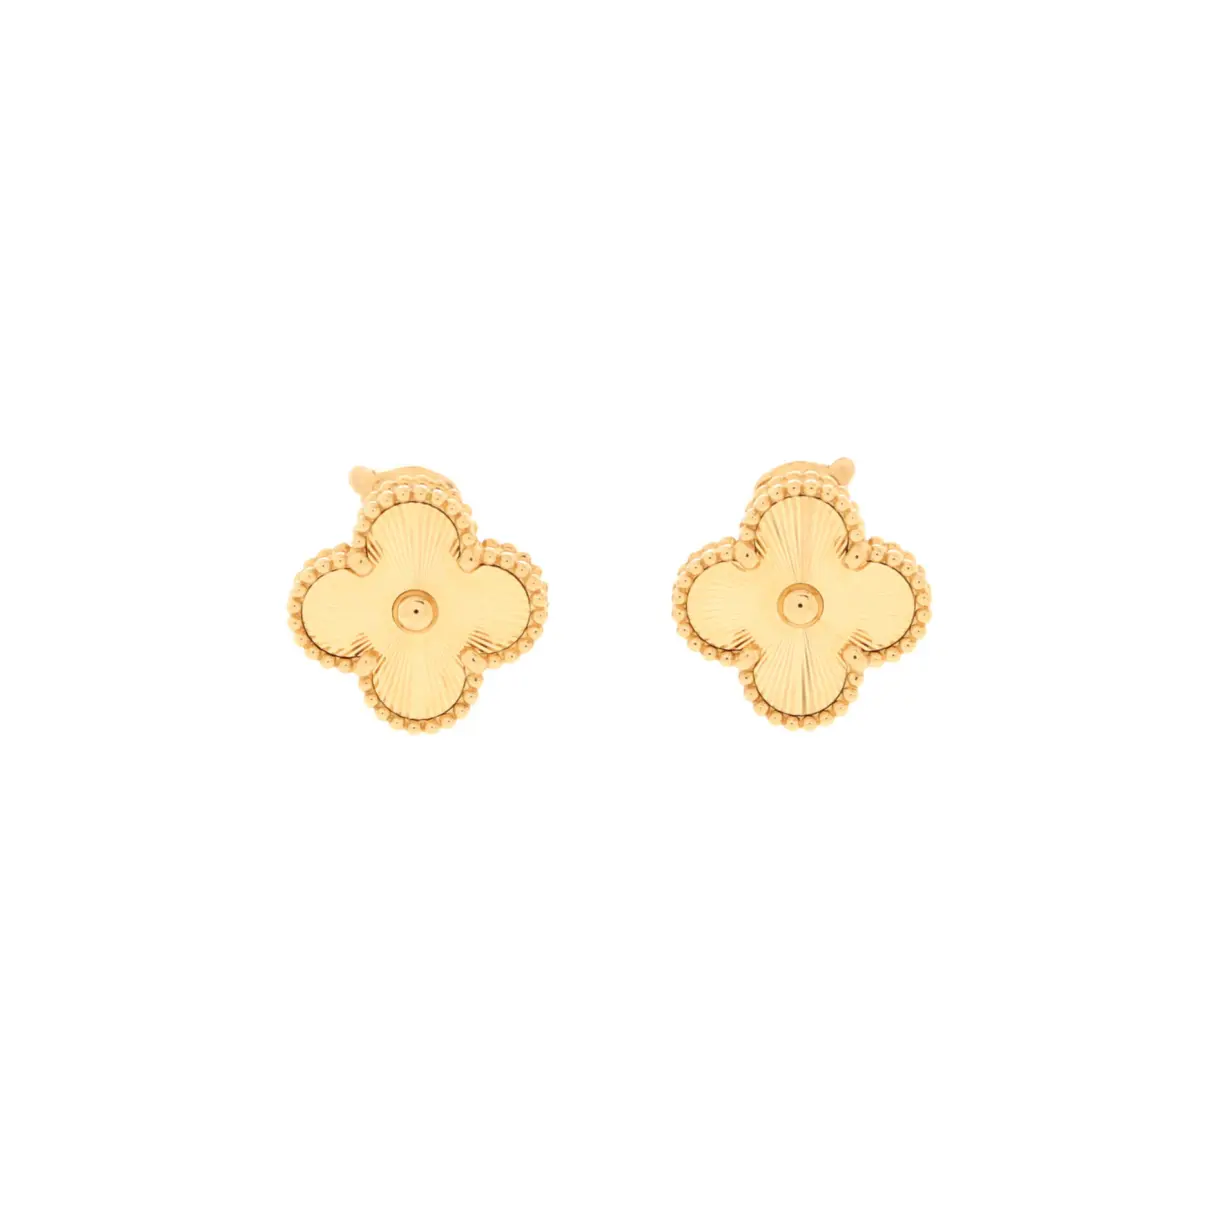 Yellow gold earrings